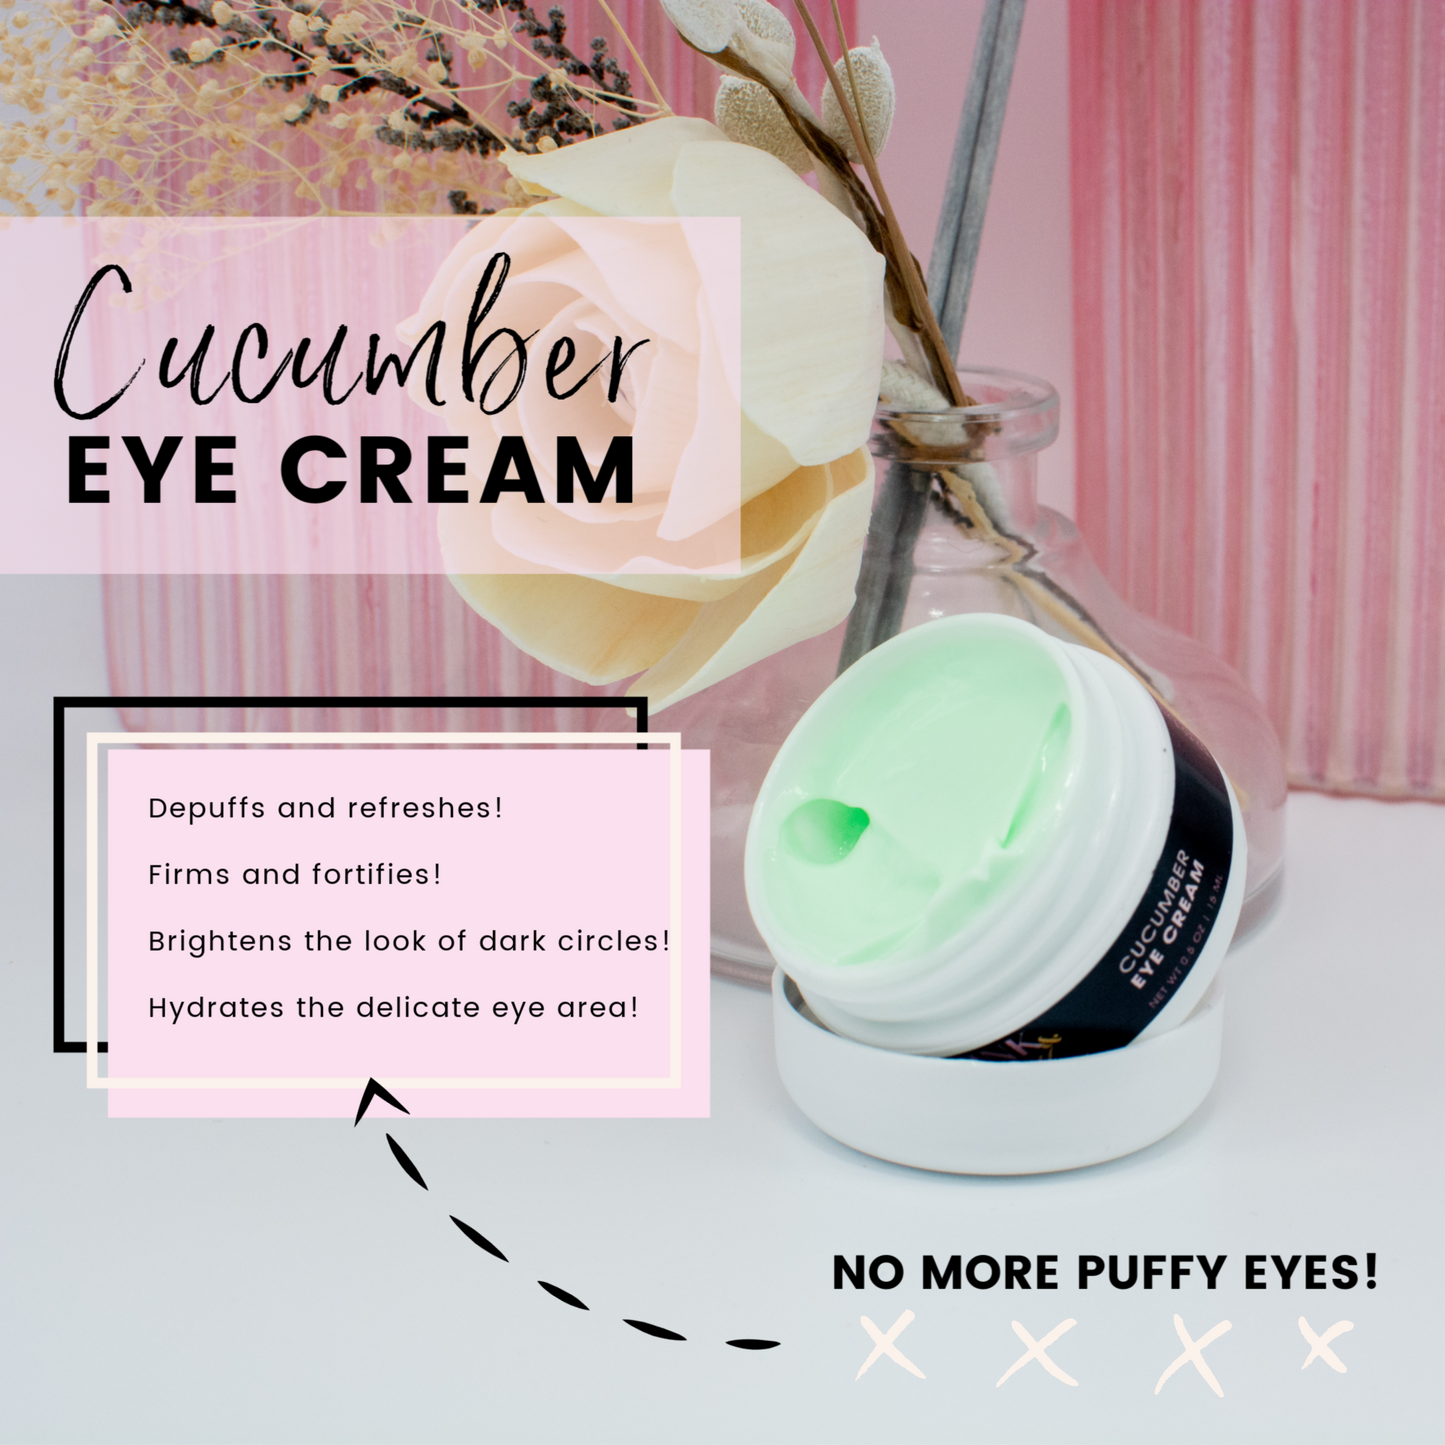 Cucumber Eye Cream